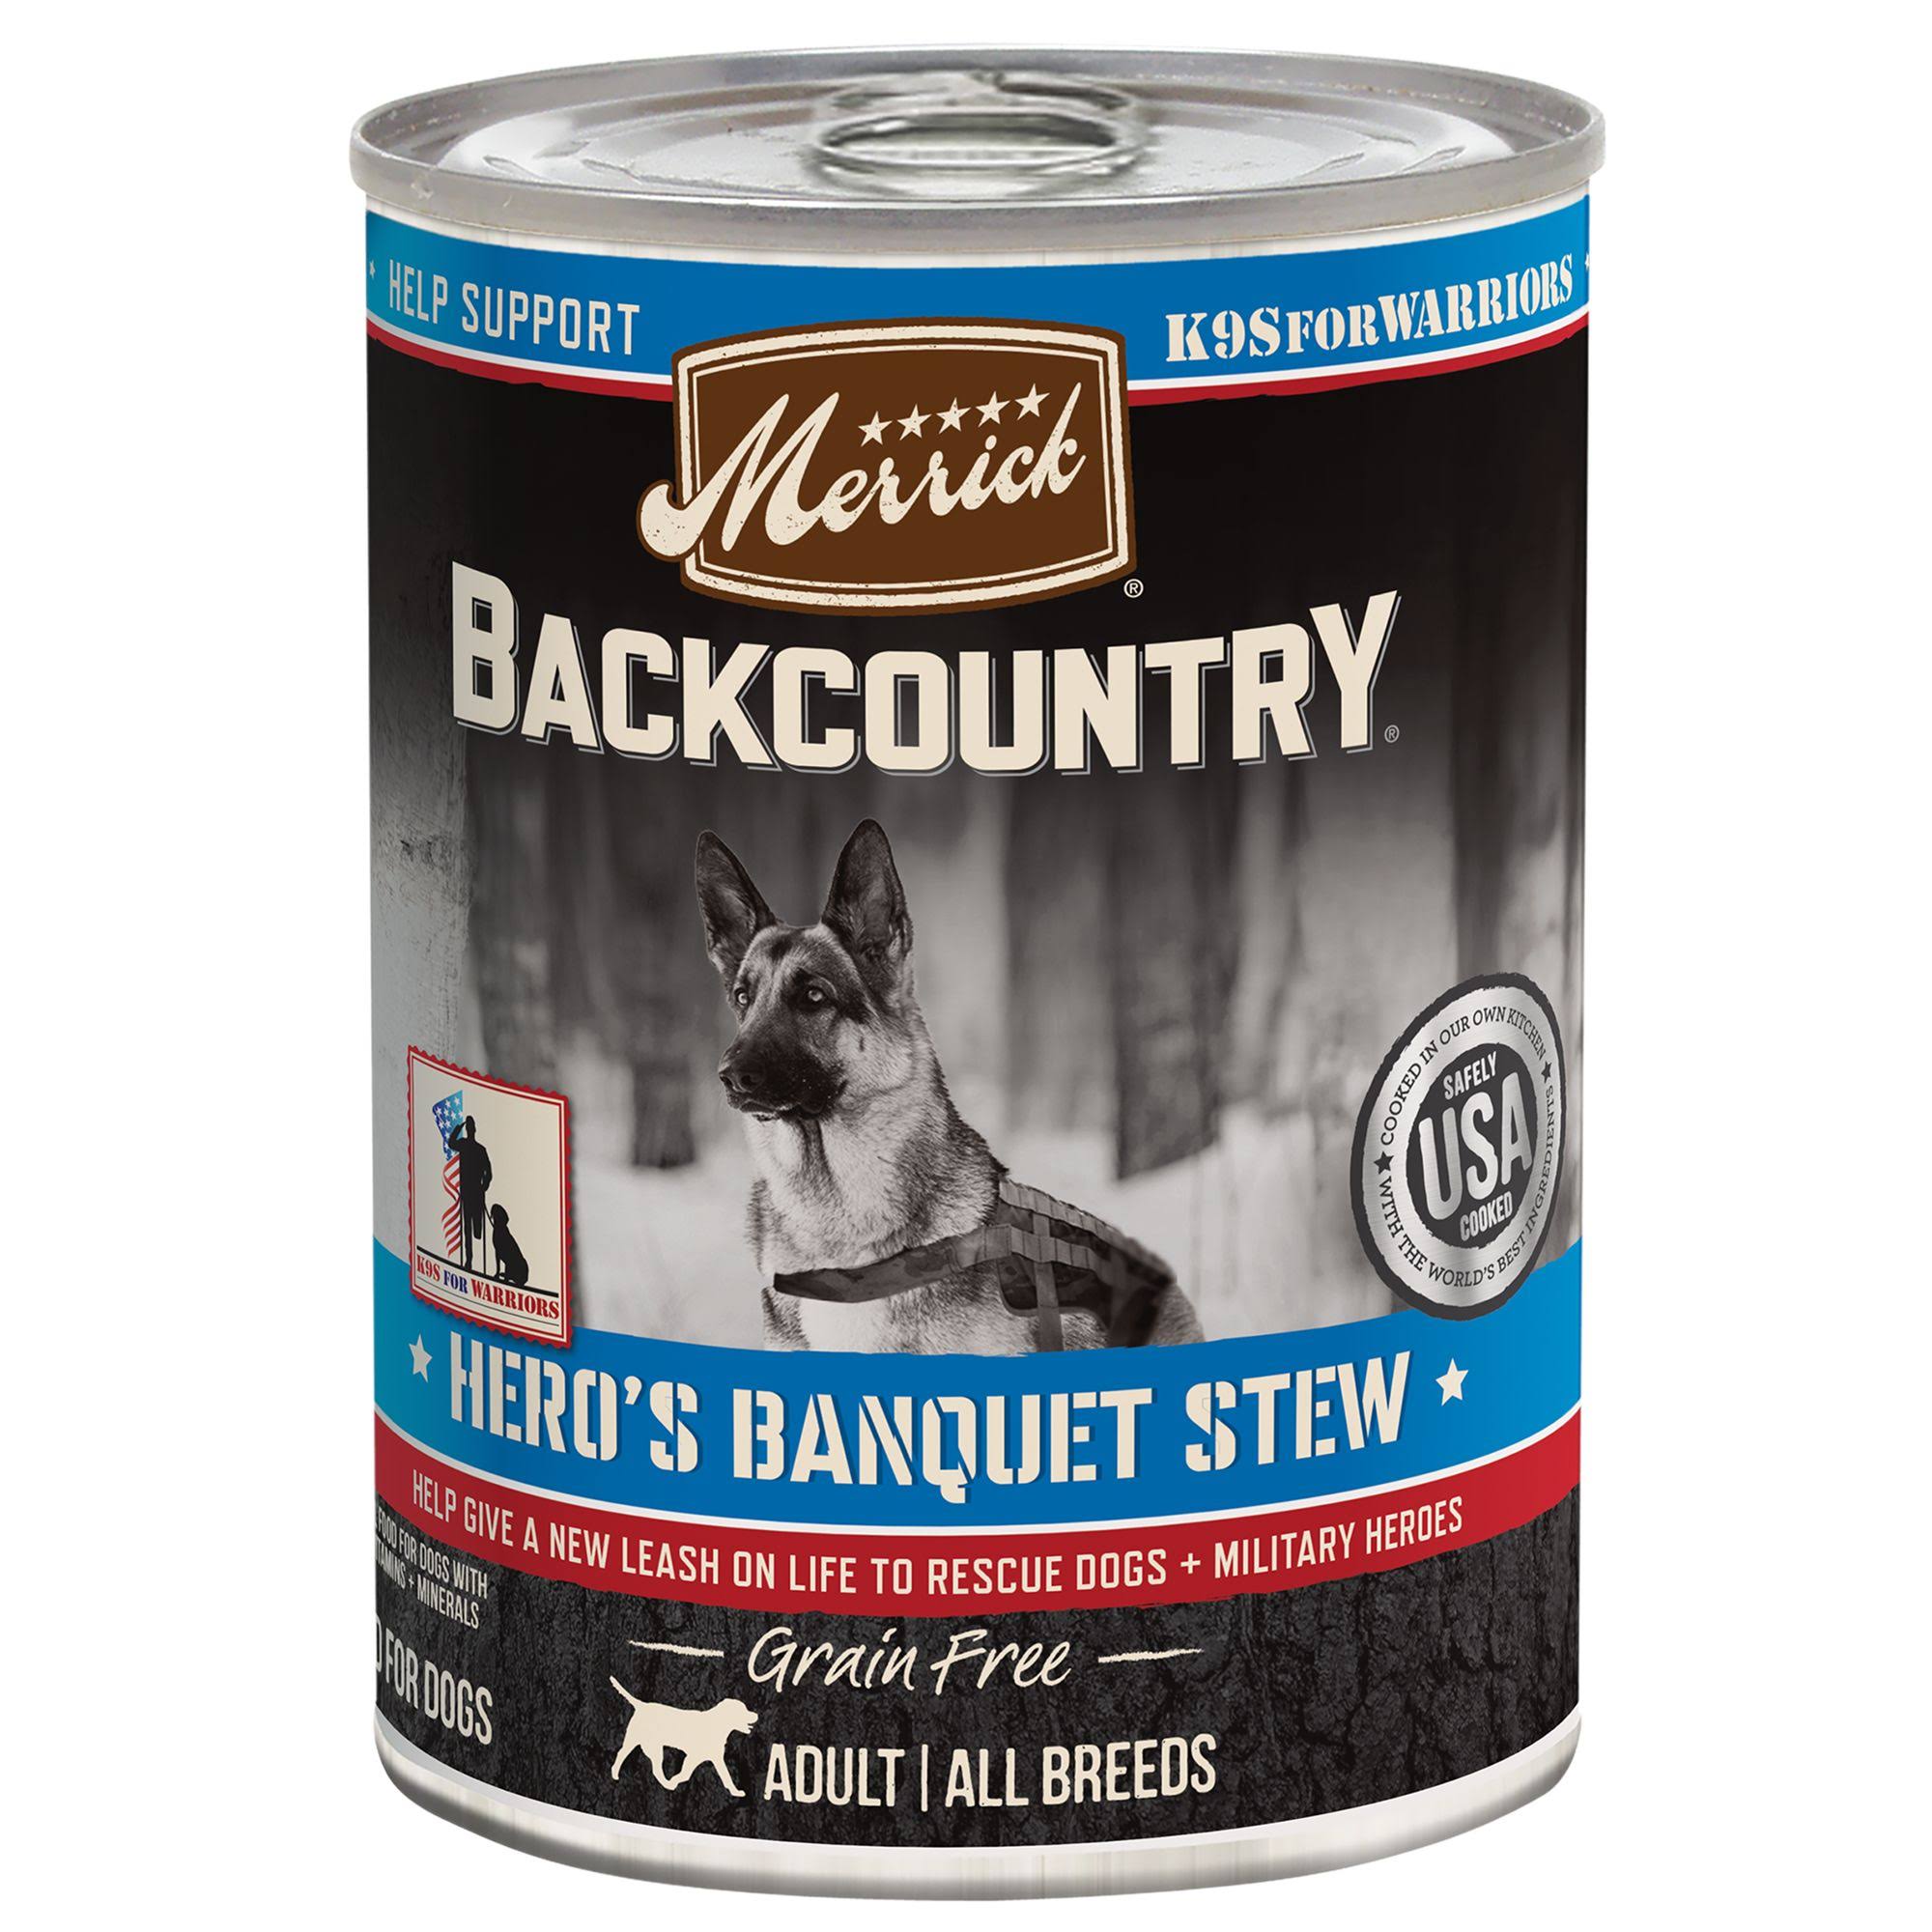 Merrick, Backcountry Grain Free Hero's Banquet Stew Dog Food, 12.7 oz.